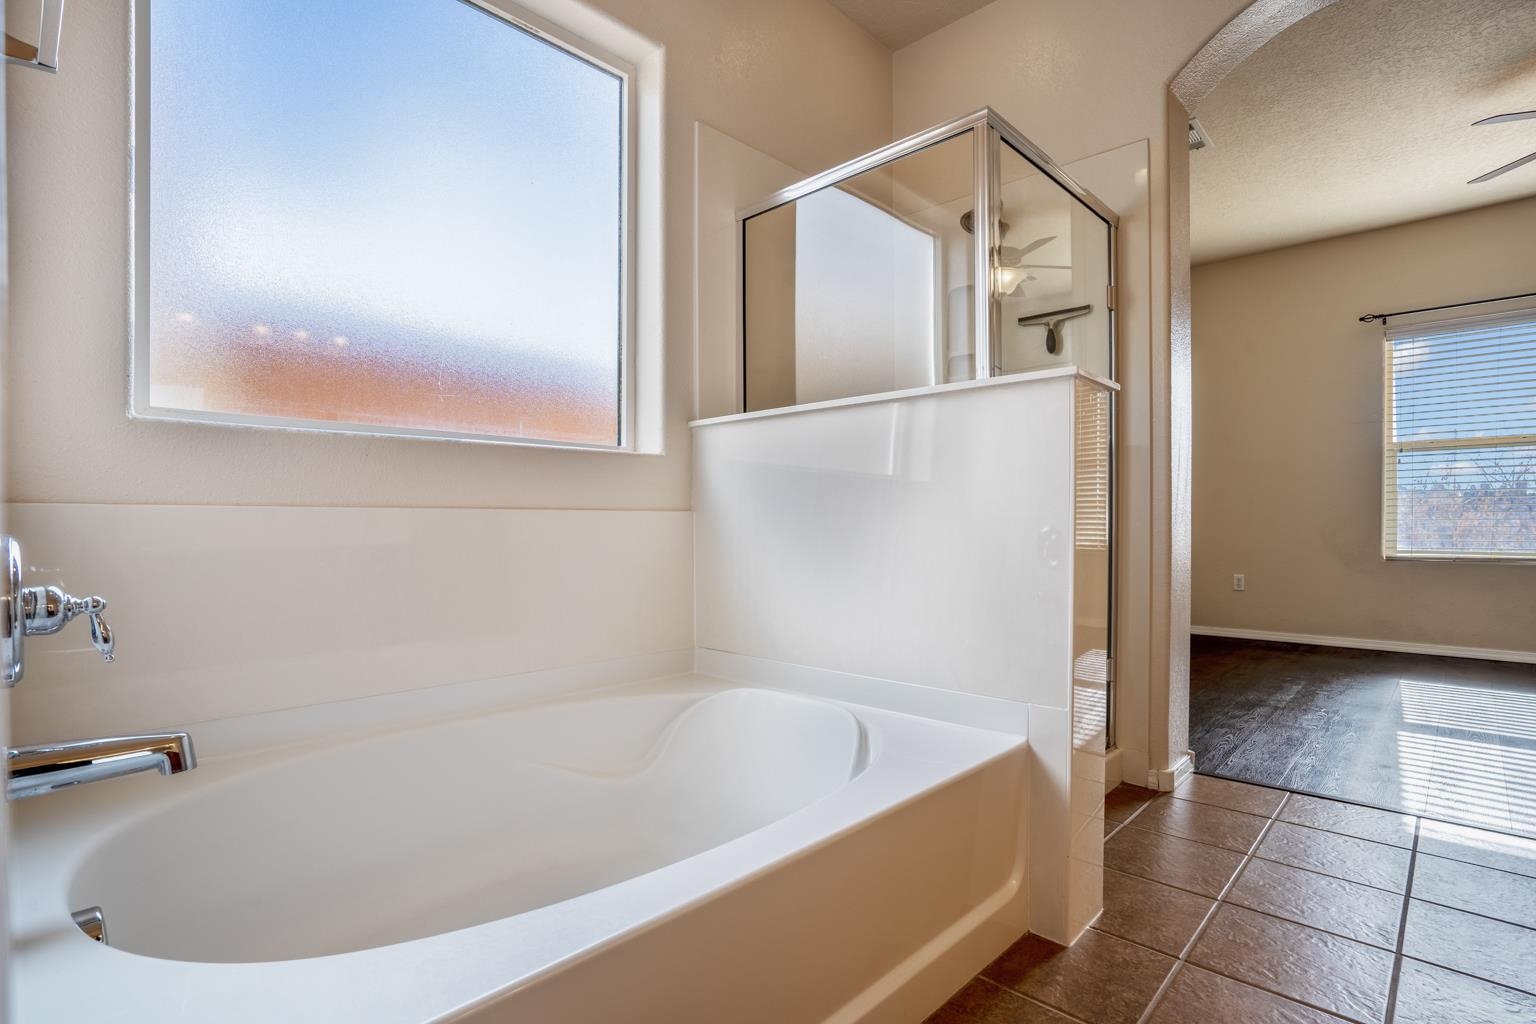 4089 MONTANA VERDE, Santa Fe, New Mexico 87507, 3 Bedrooms Bedrooms, ,2 BathroomsBathrooms,Residential,For Sale,4089 MONTANA VERDE,202105192